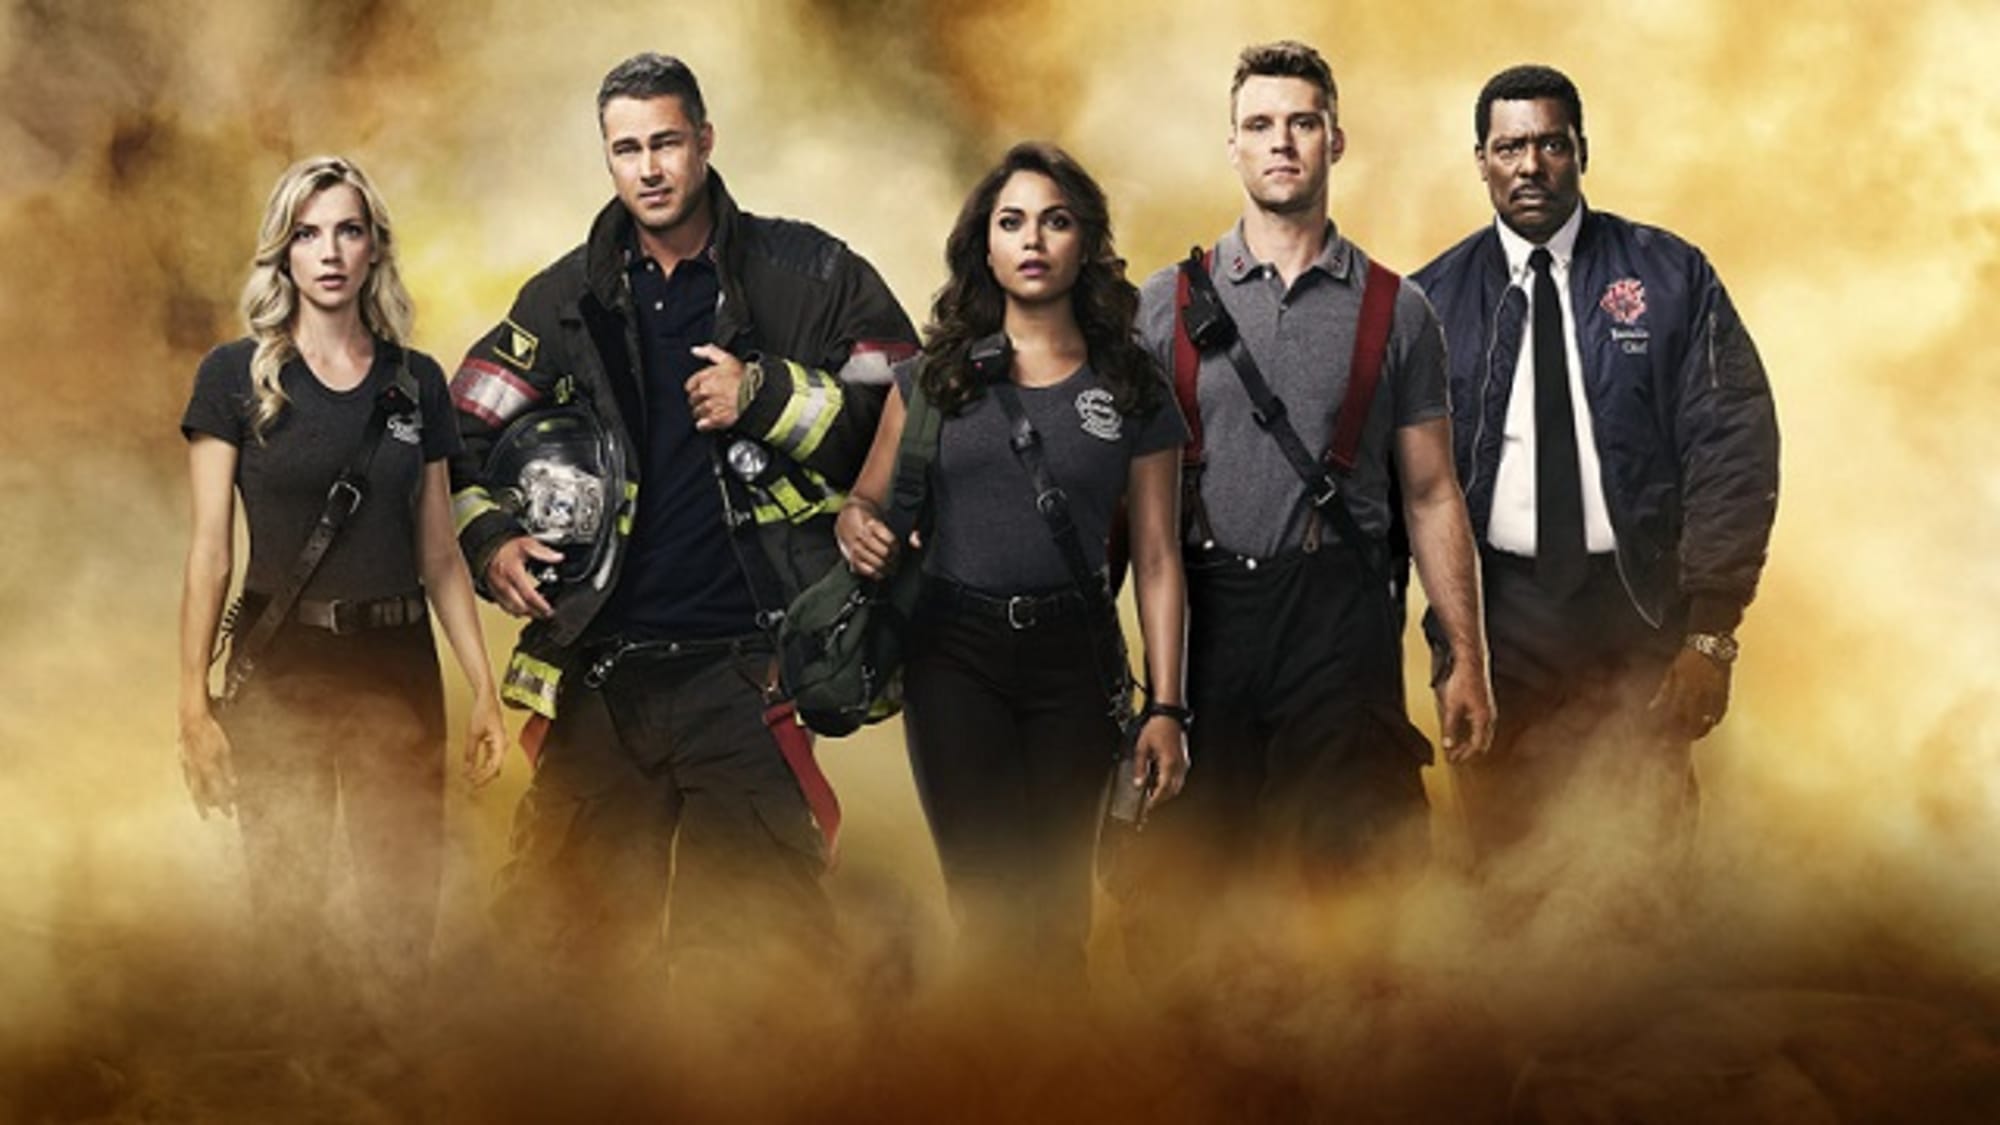 Chicago Fire The 5 best Chicago Fire season 6 episodes